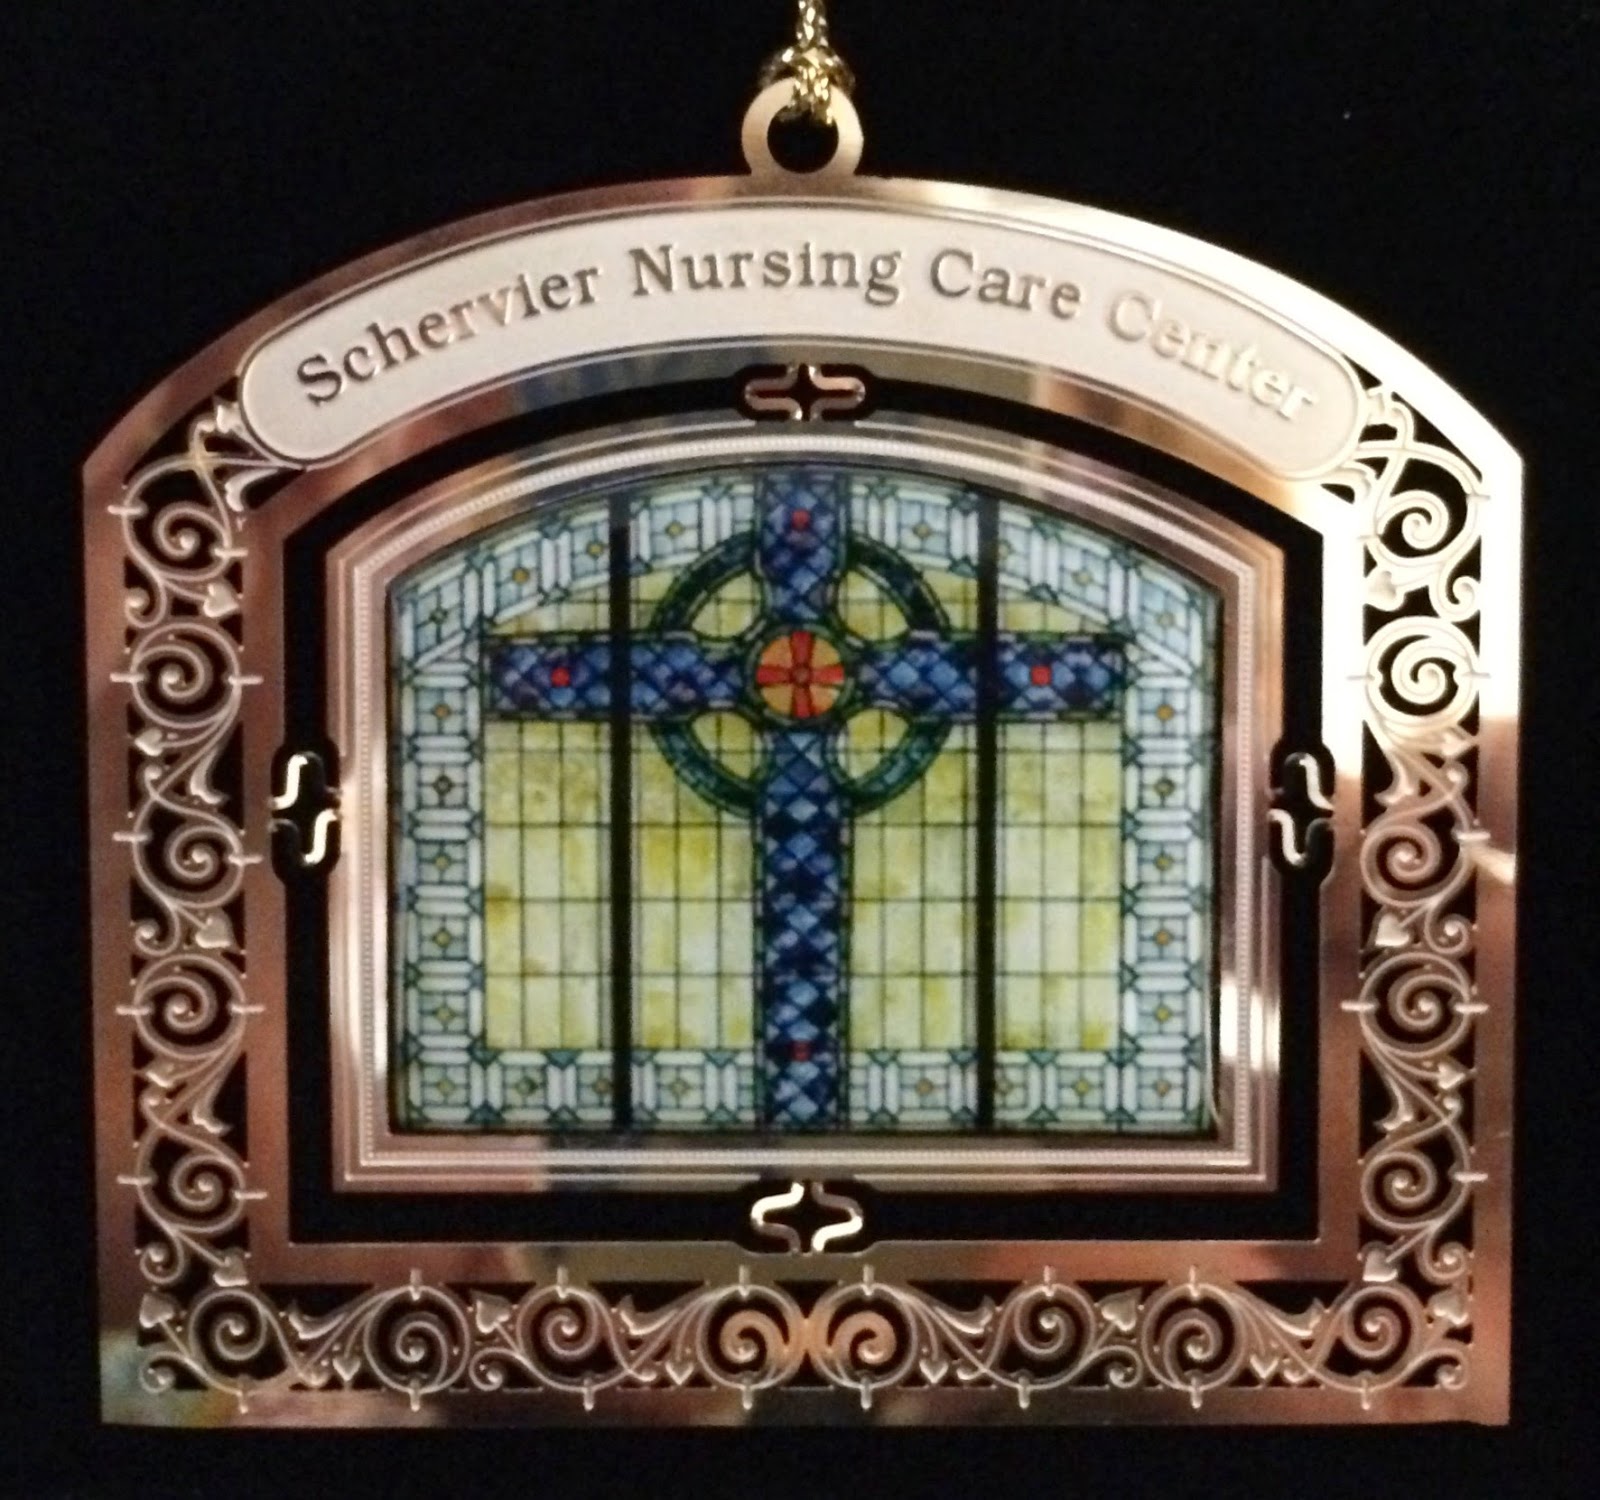 Photo of Schervier Nursing Care Center in Bronx City, New York, United States - 6 Picture of Point of interest, Establishment, Health